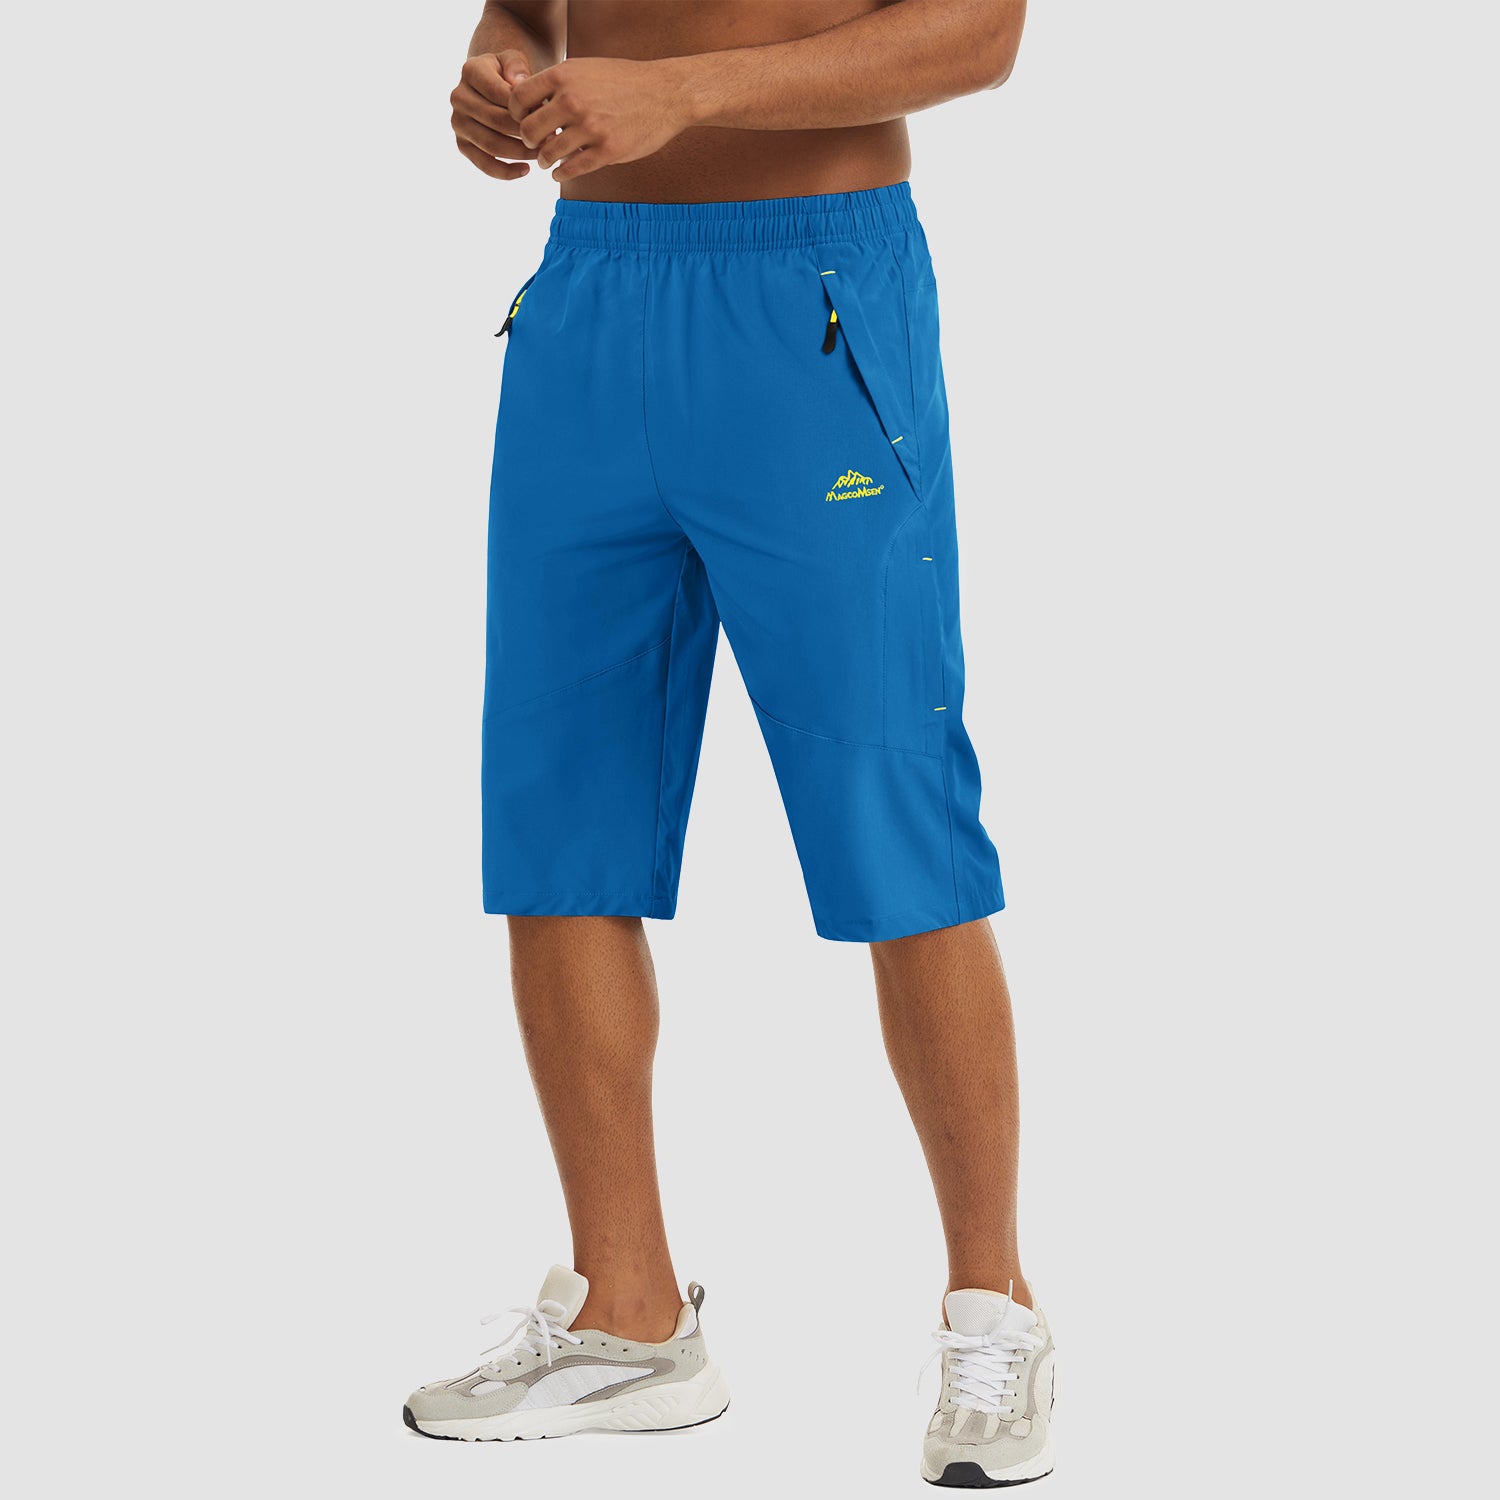 Men Summer Sport Quick Drying Shorts Reflective Drawstring Zipper Pocket  Shorts